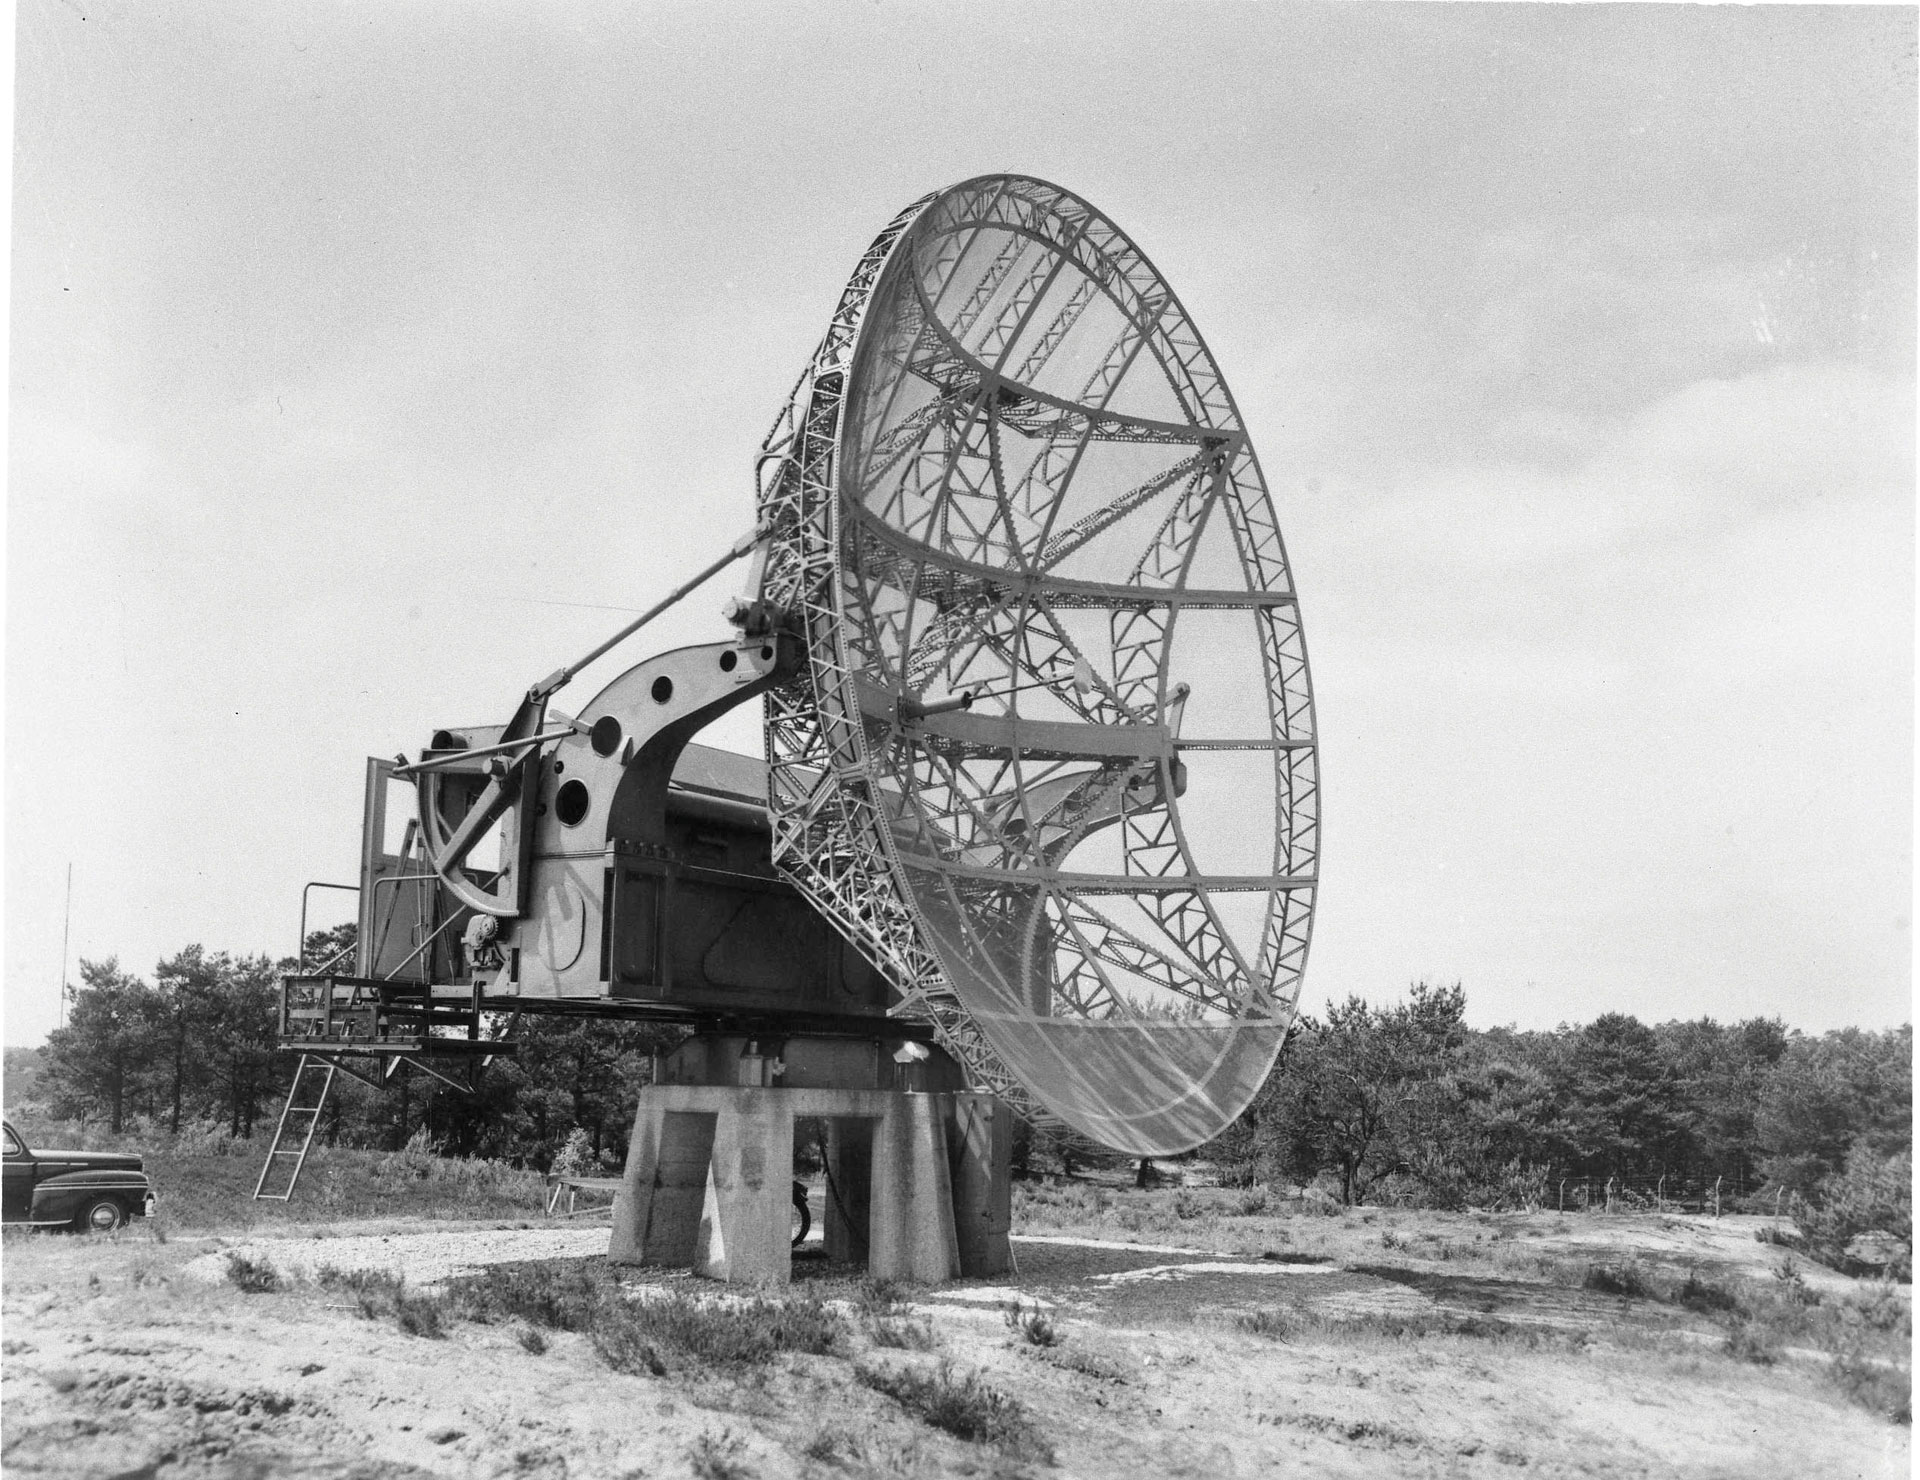 Kootwijk Antenna 1967